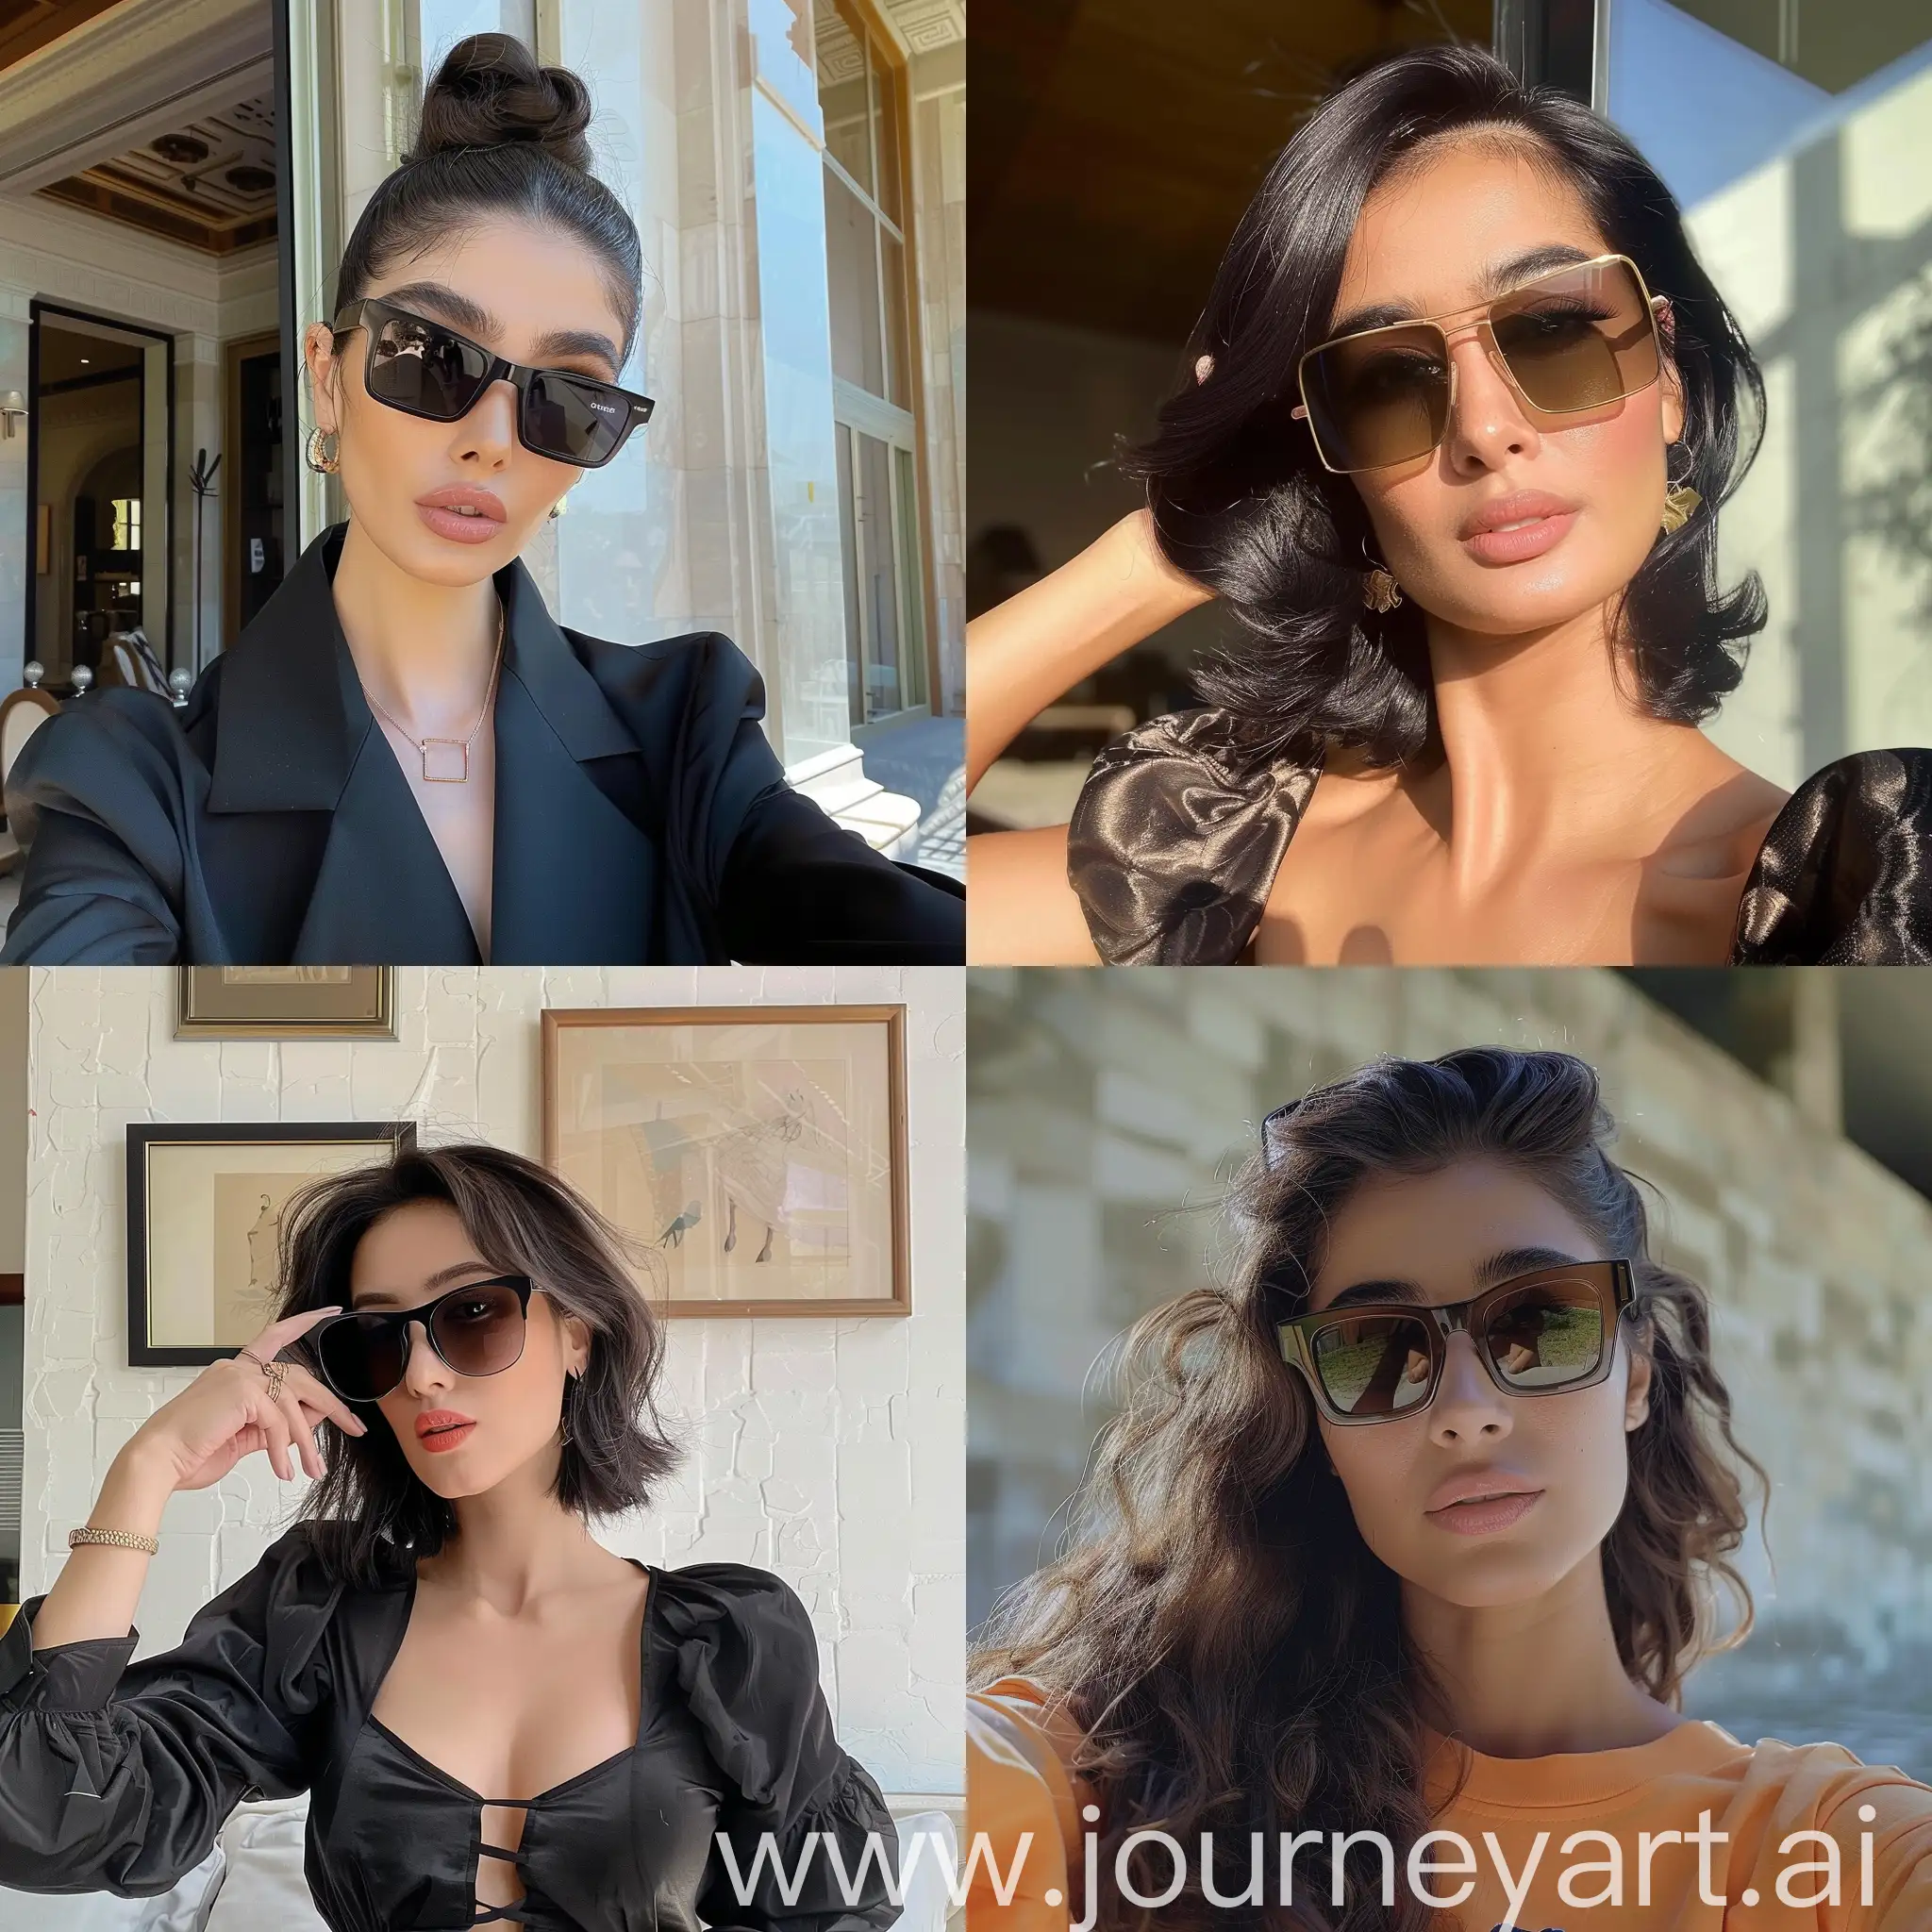 Dela-Rostami-Taking-Selfie-with-Sunglasses